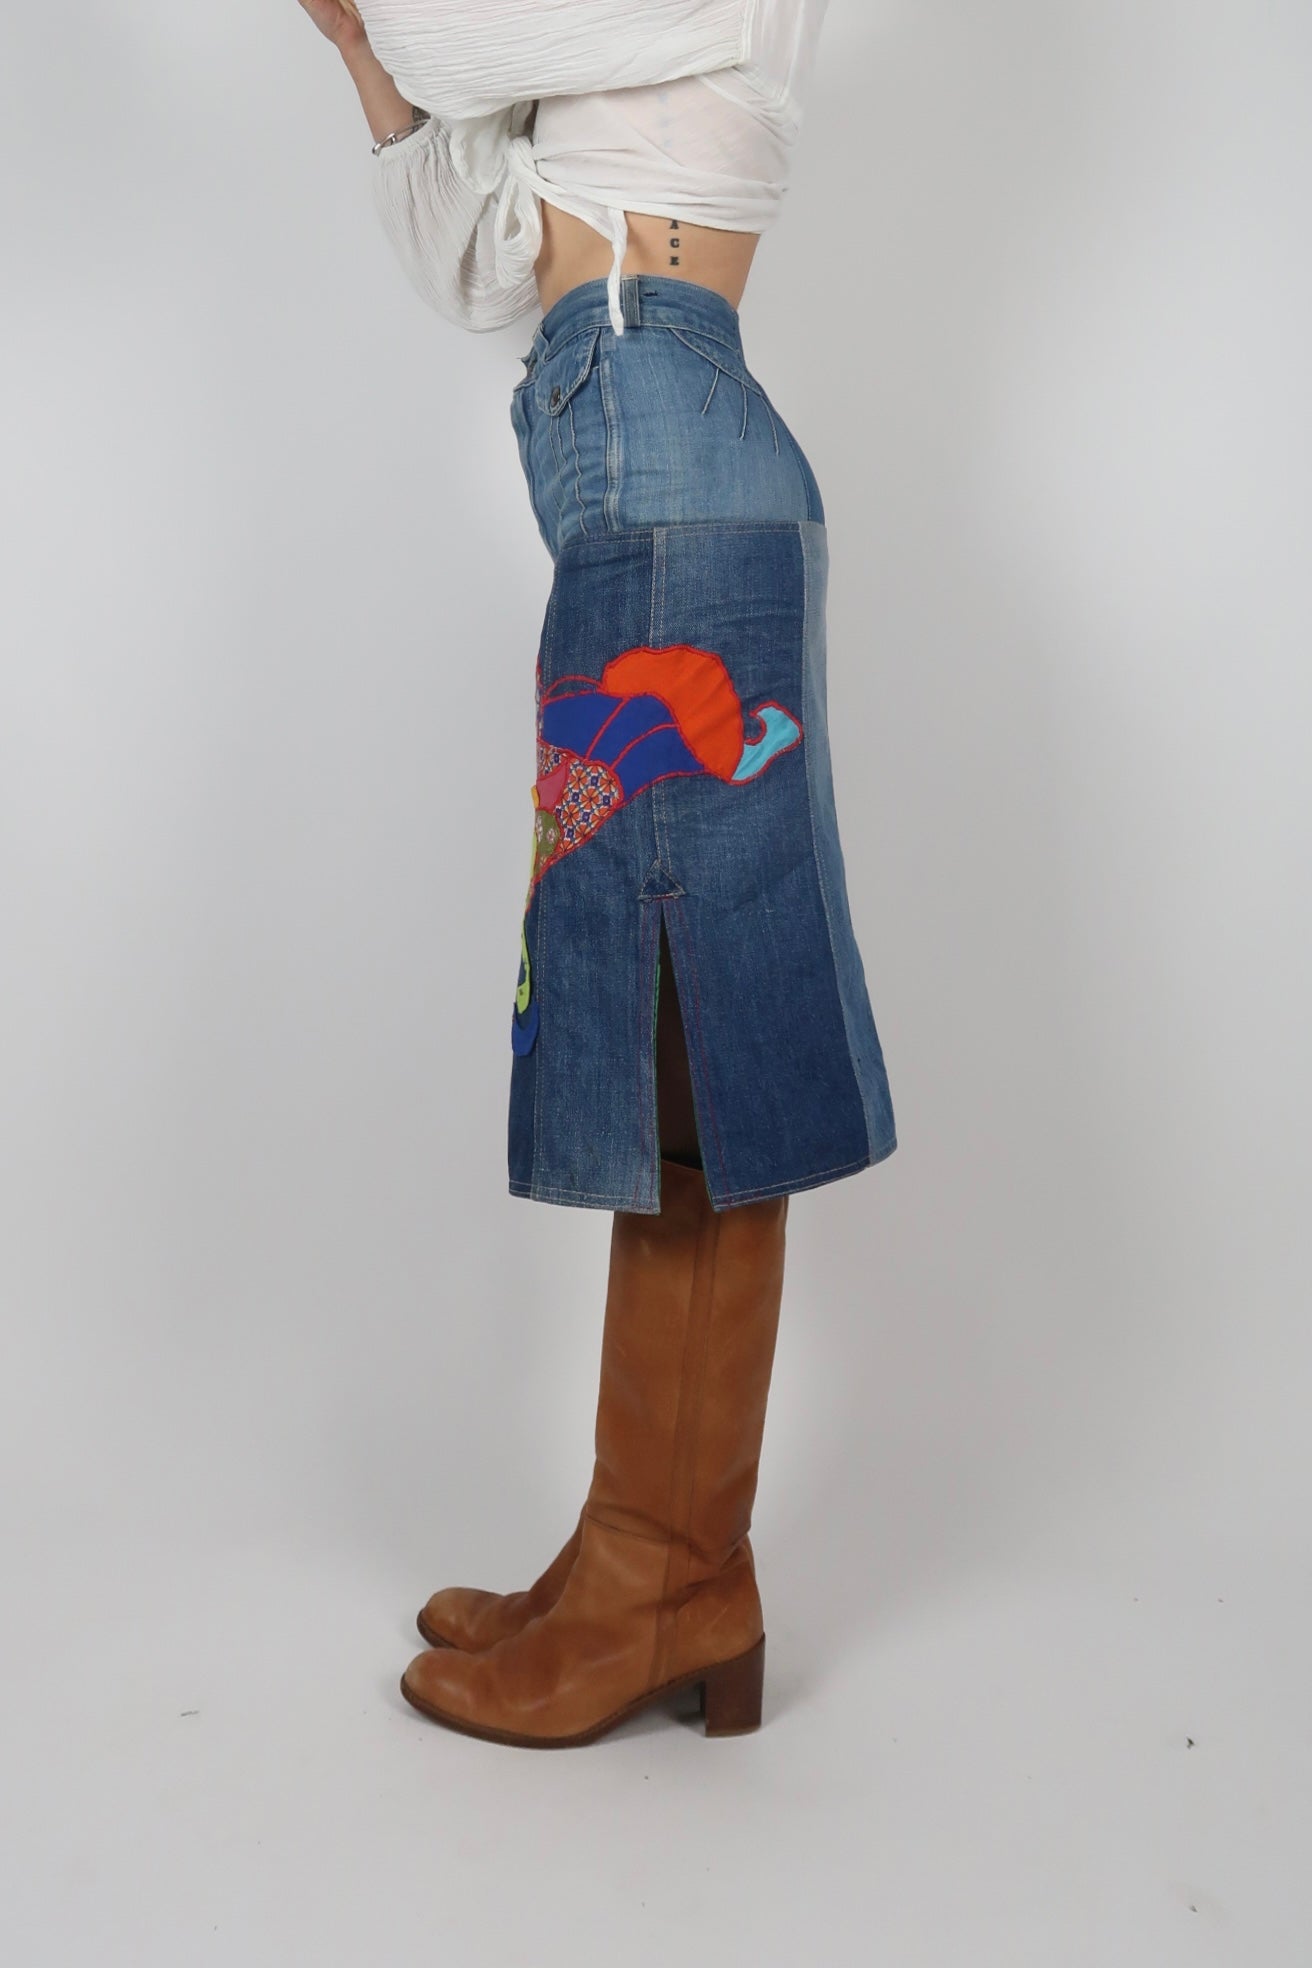 1970s FIORUCCI skirt